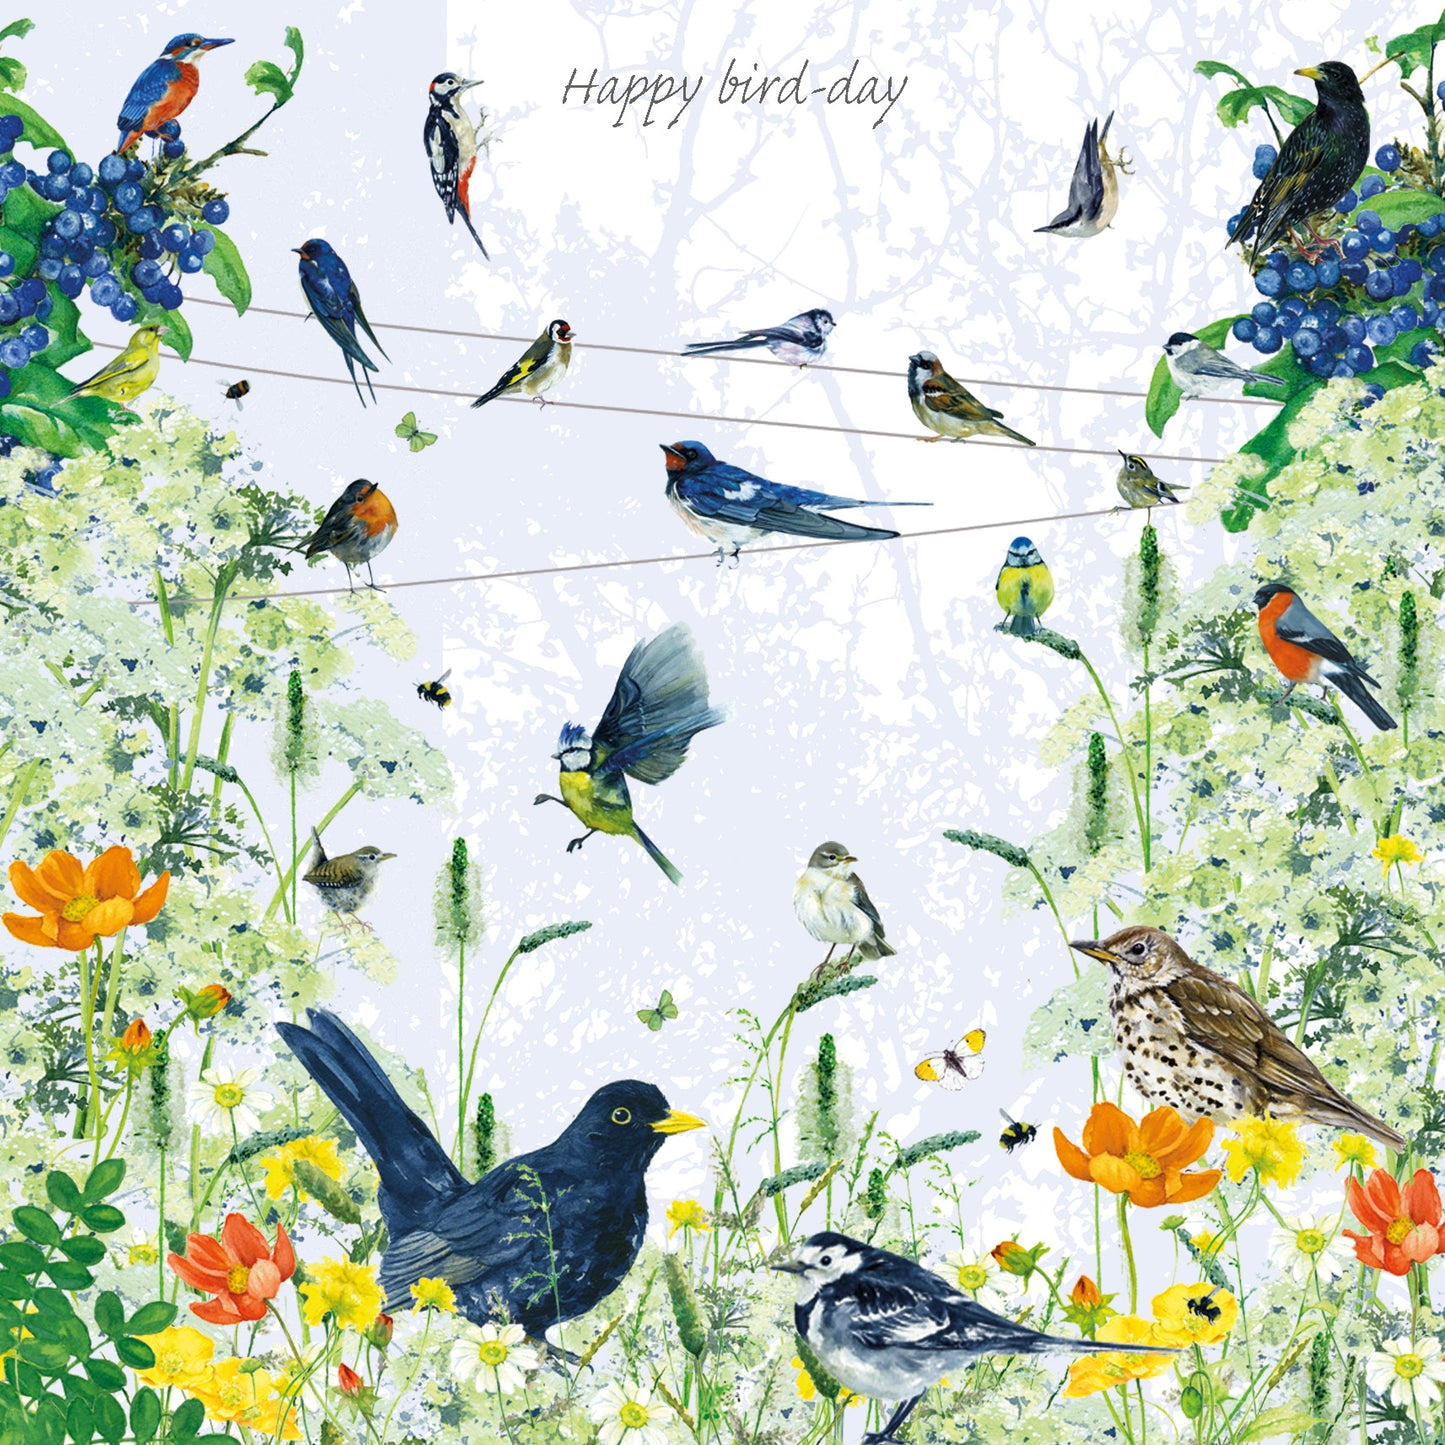 British Birds Greeting Card - Happy bird-day!